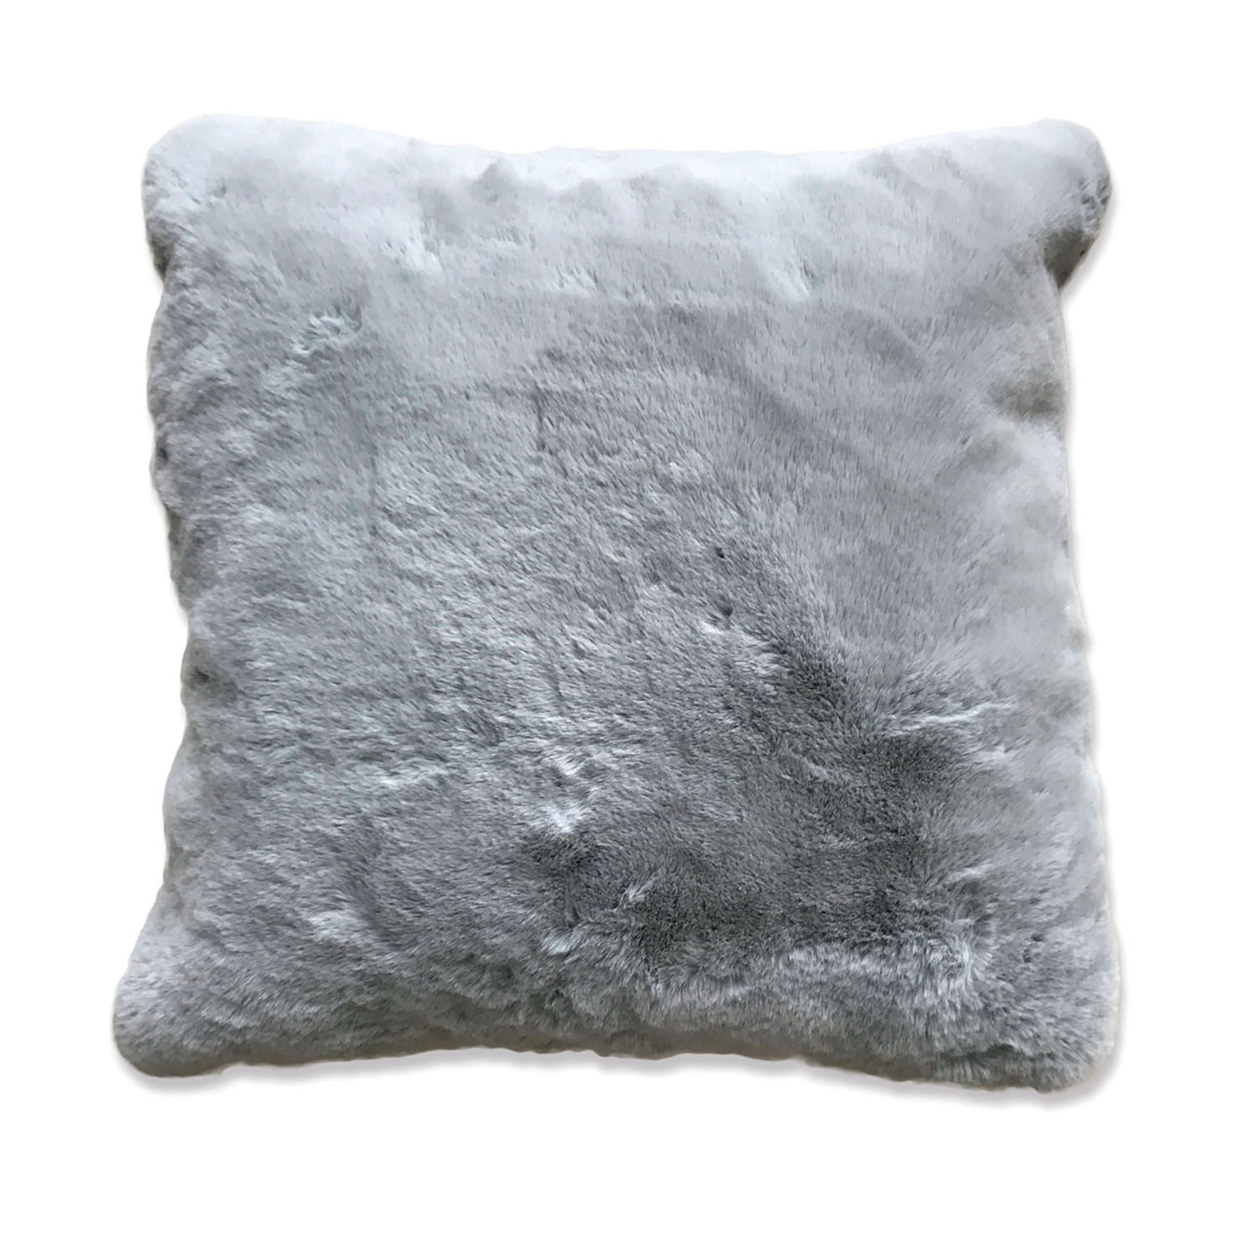 20 X 20 Inch Fabric Accent Pillow With Fur Like Texture, Light Gray- Saltoro Sherpi